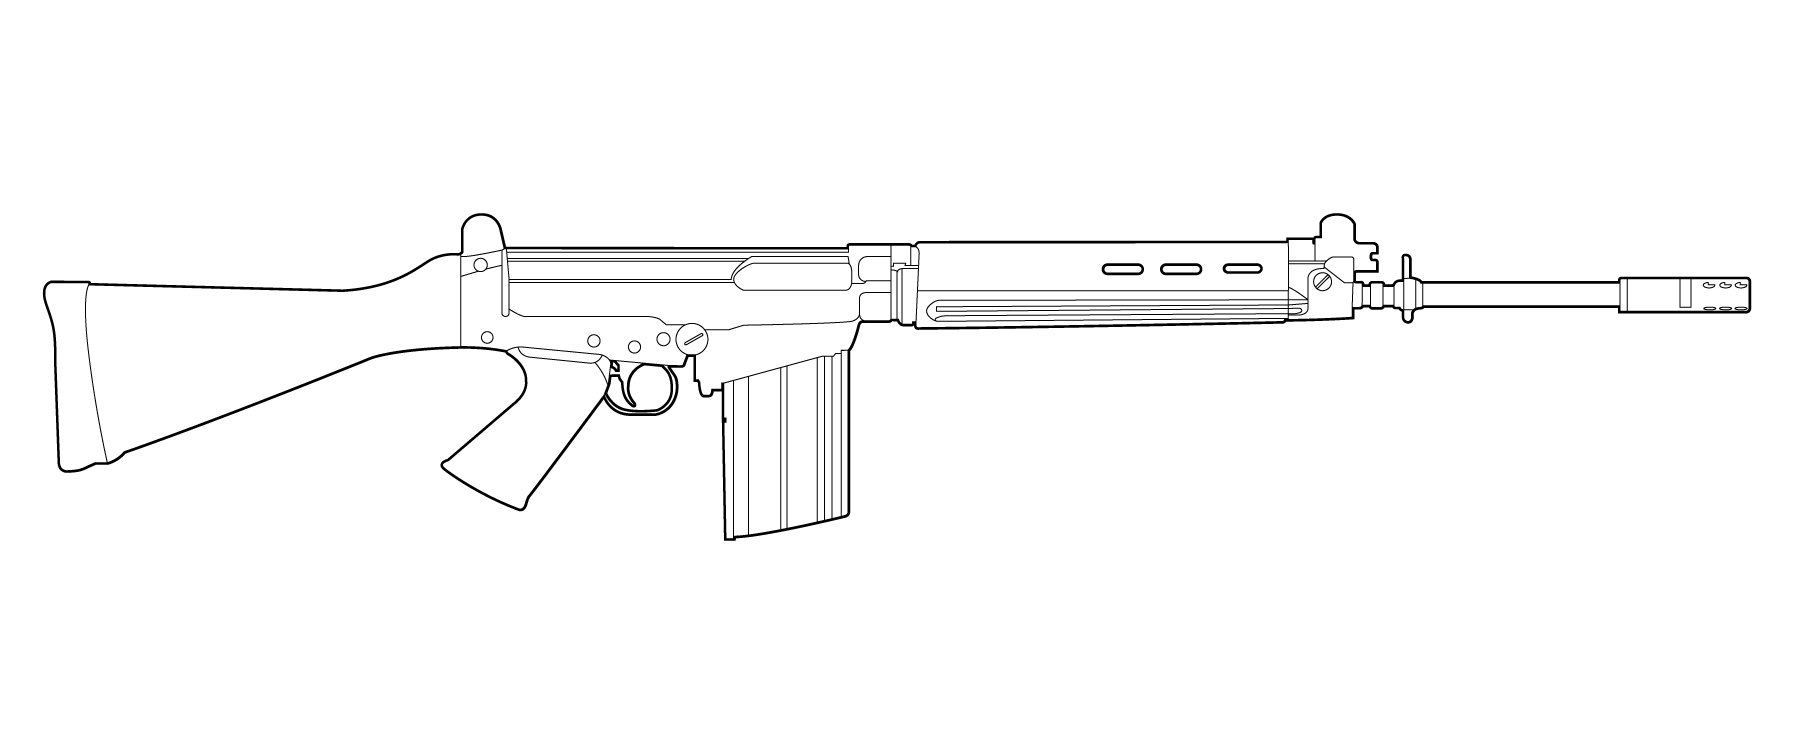 М416 автомат чертеж. FN fal чертеж. Автомат м16 чертеж. М40 винтовка чертеж.